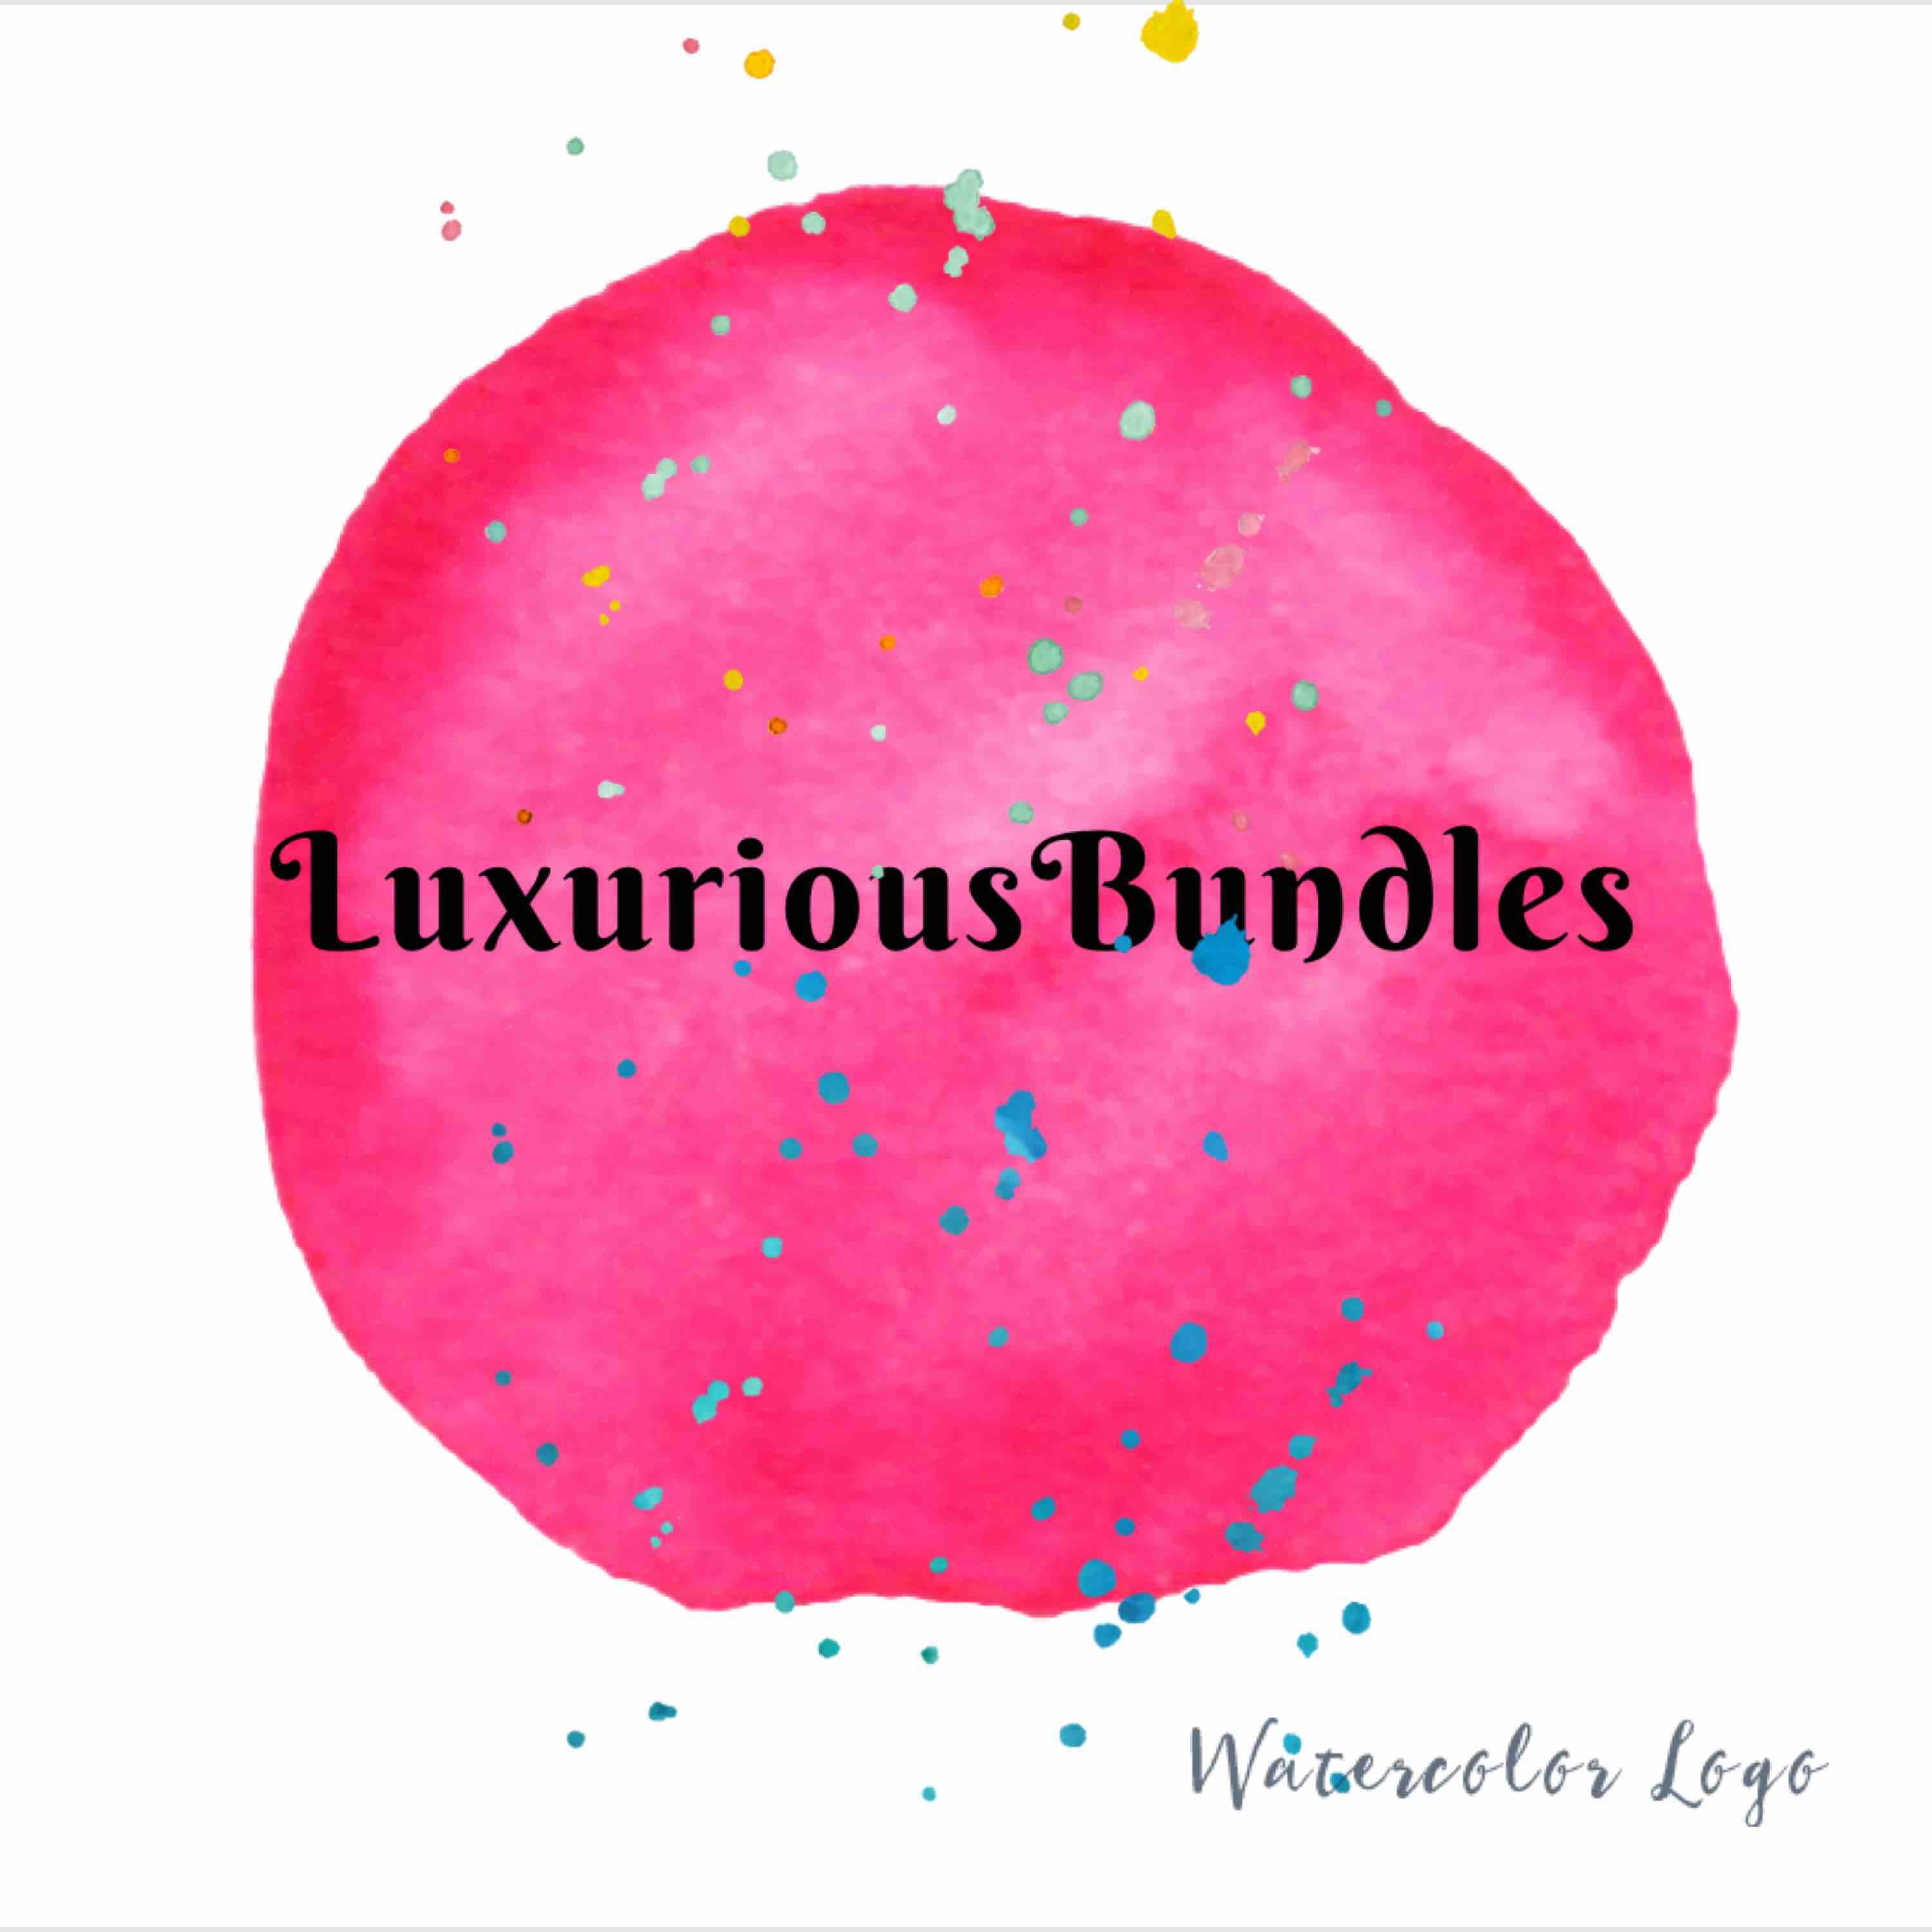 Luxurious Bundles